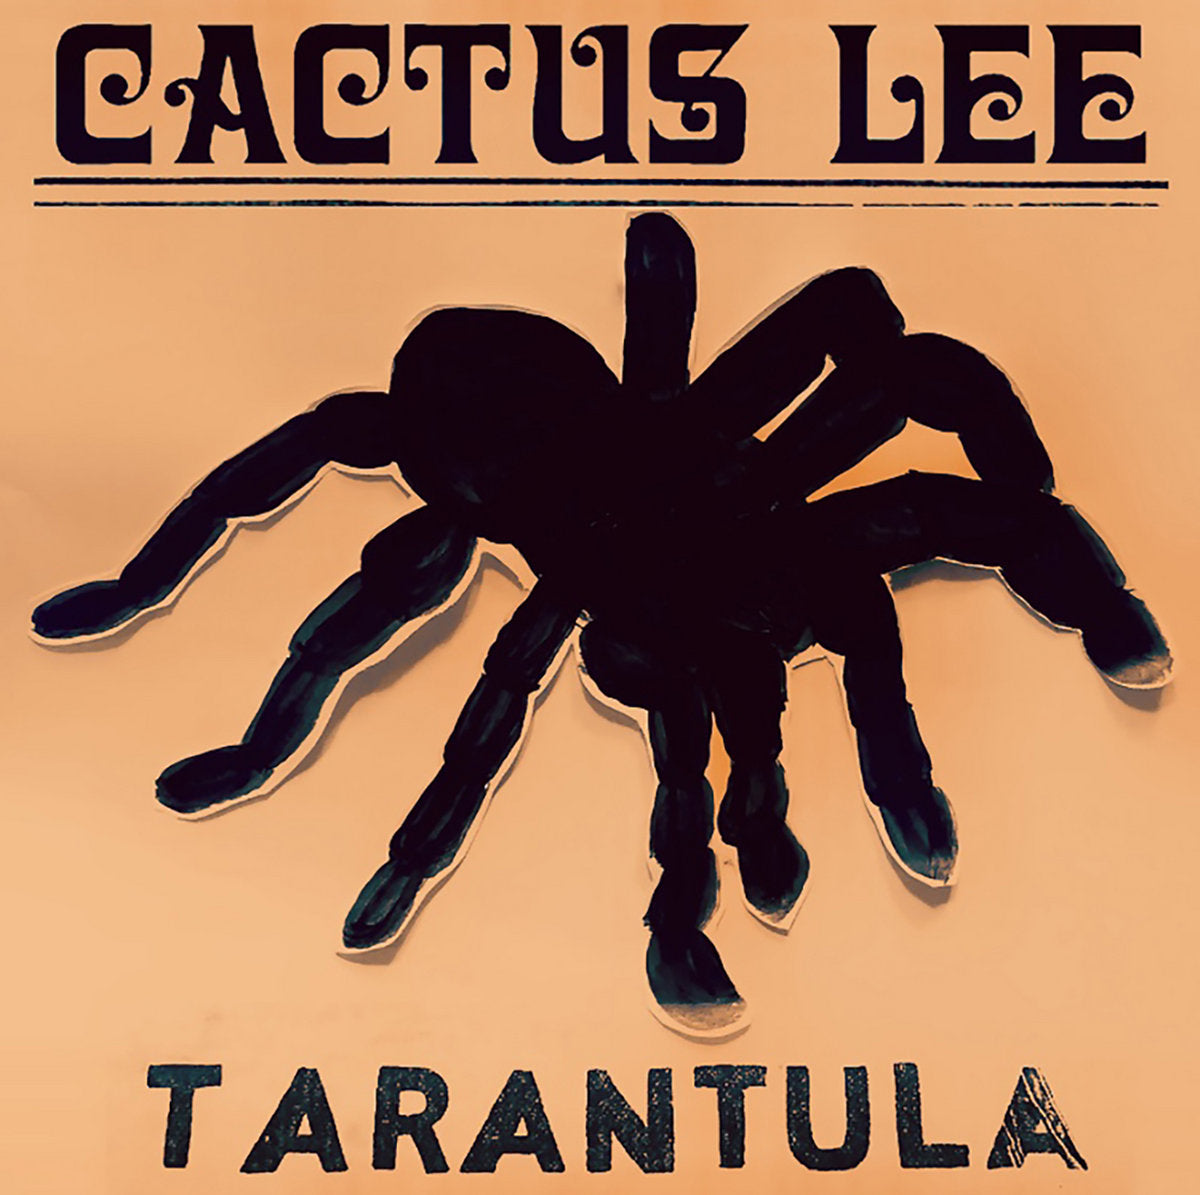 Cactus Lee - Tarantula